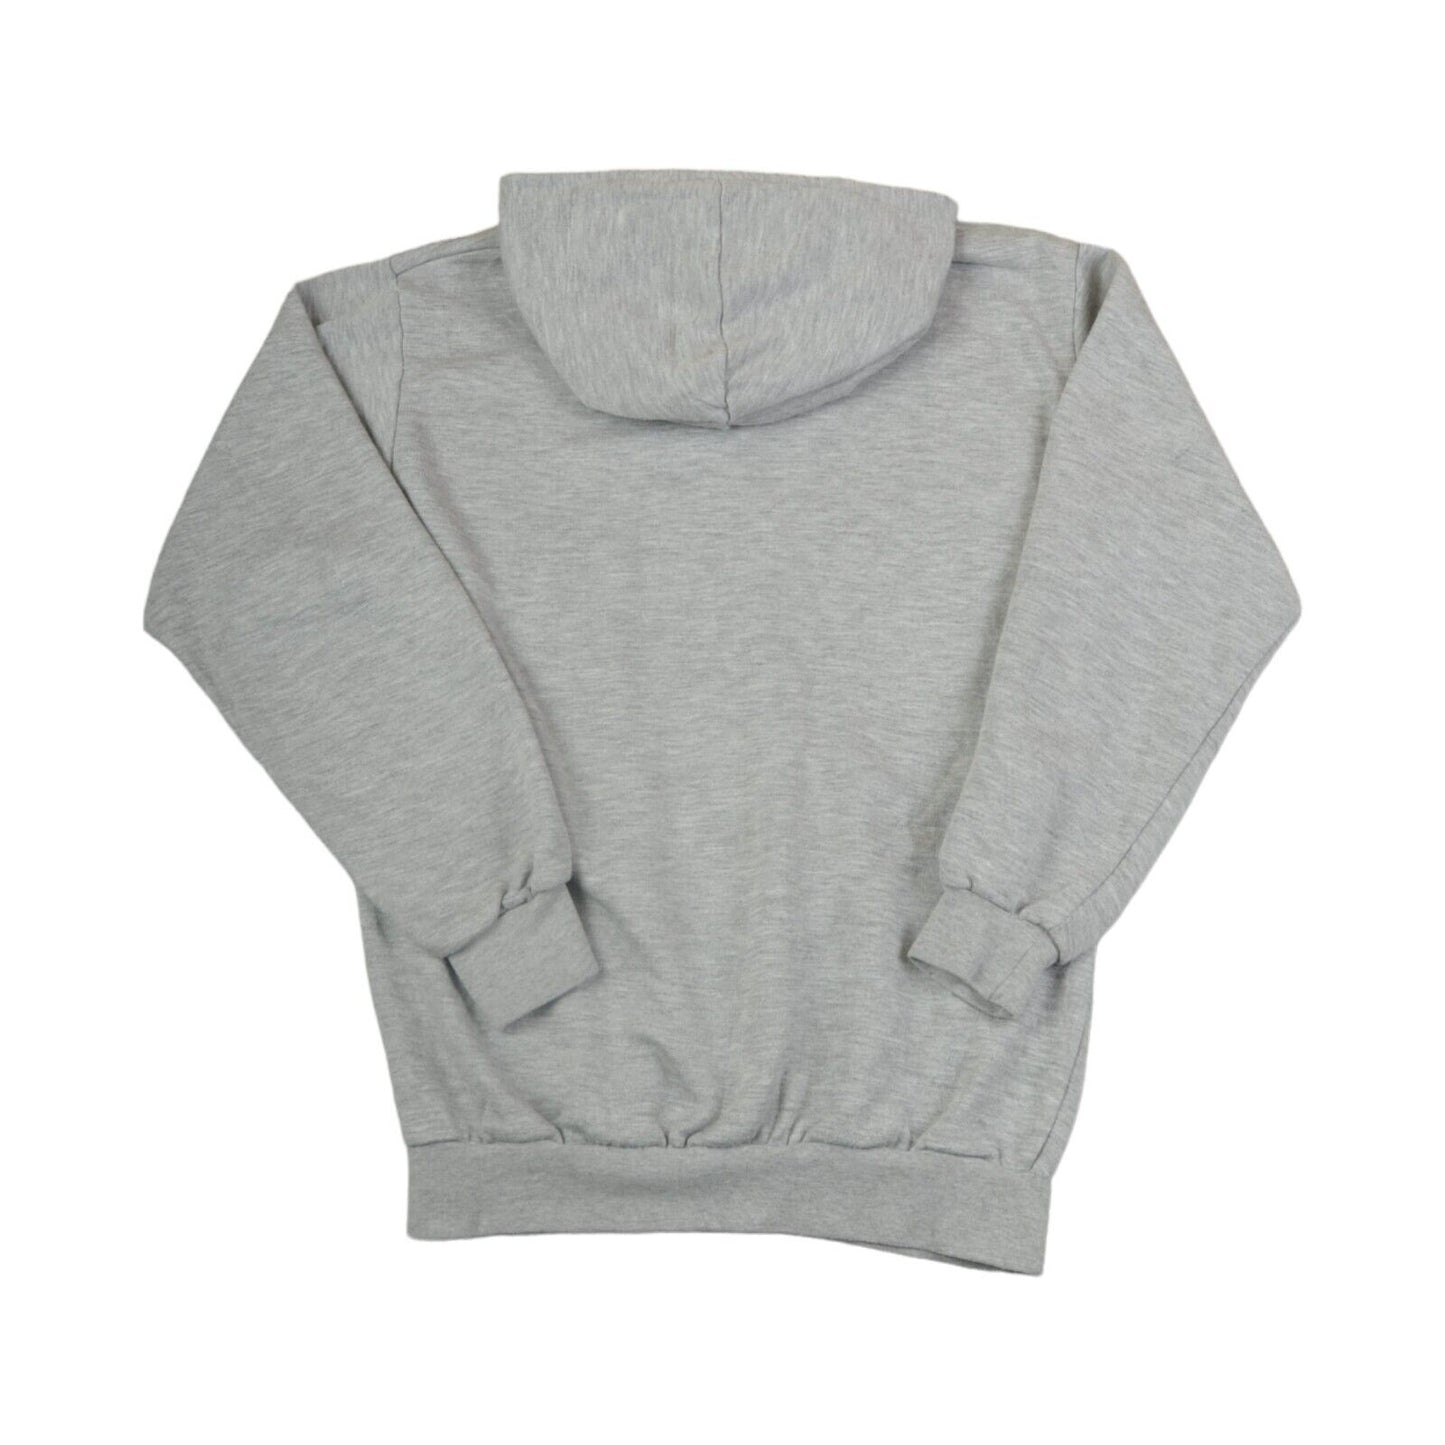 Vintage Universita' Siena Hoodie Sweatshirt Grey Medium